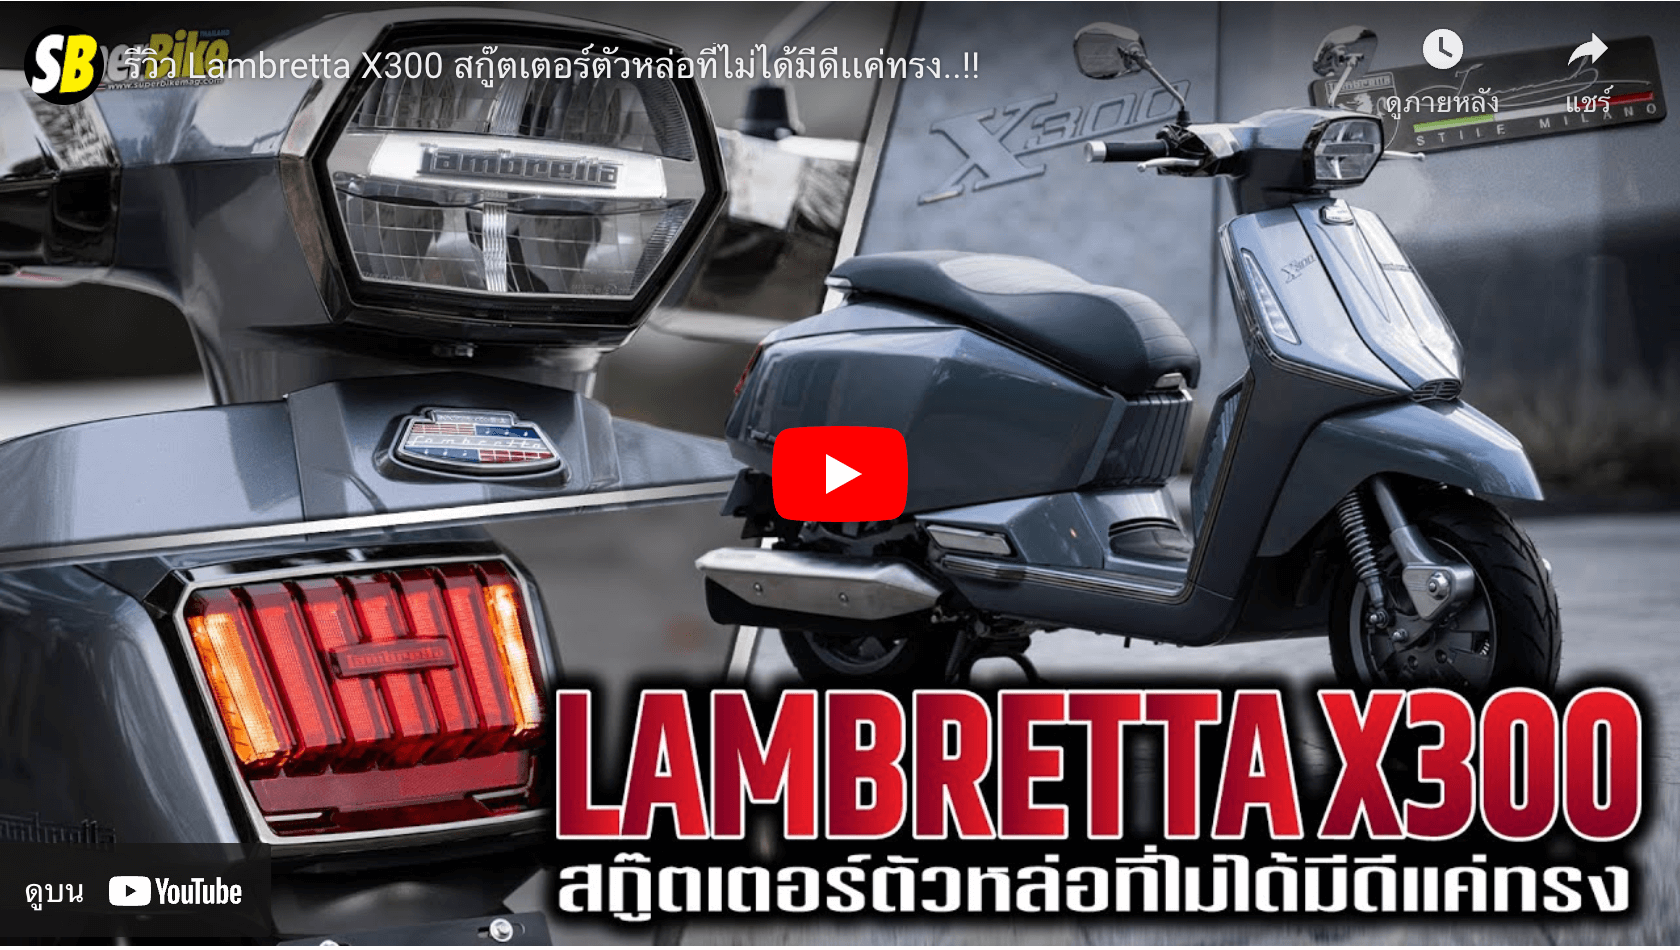 Lambretta X300 Superbike